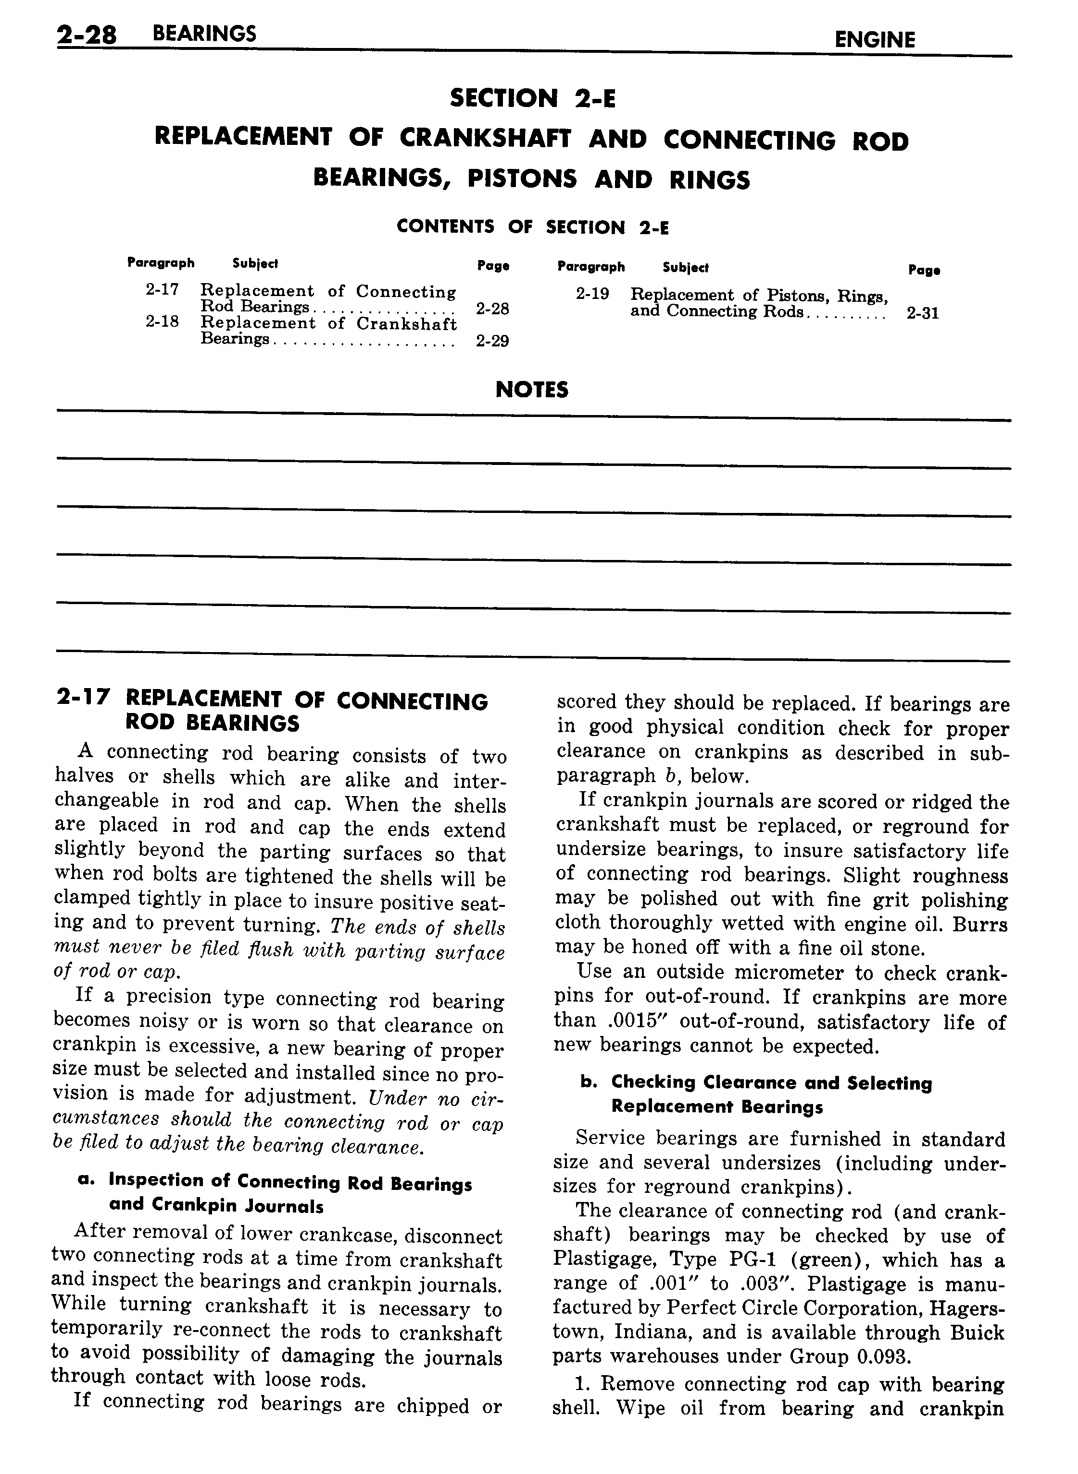 n_03 1957 Buick Shop Manual - Engine-028-028.jpg